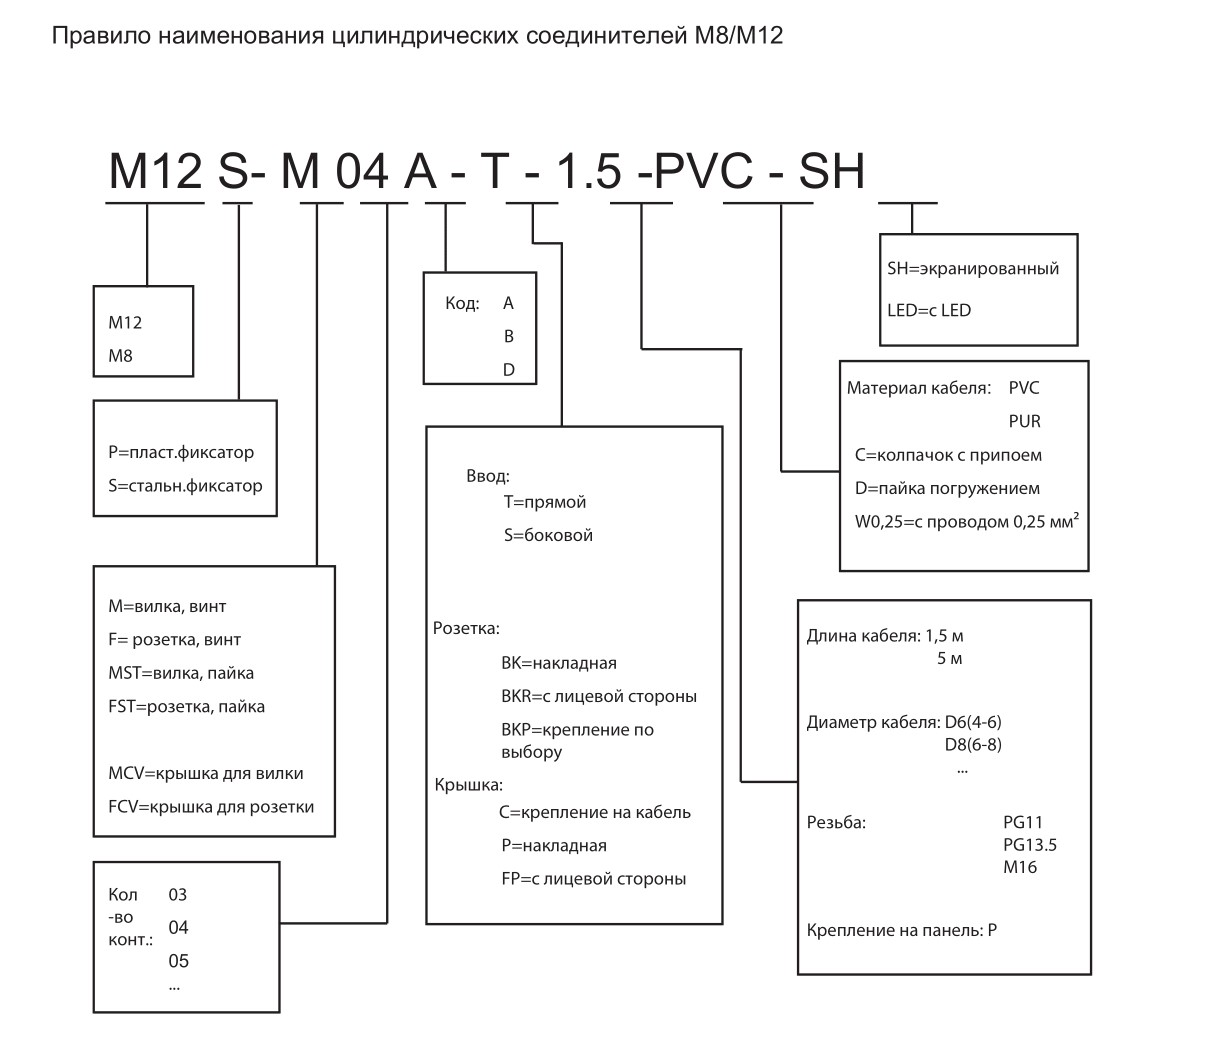 Цилиндрический соединитель-вилка с кабелем M12-M04D-BK-PG9-PFN 1630043014017: Структура обозначения